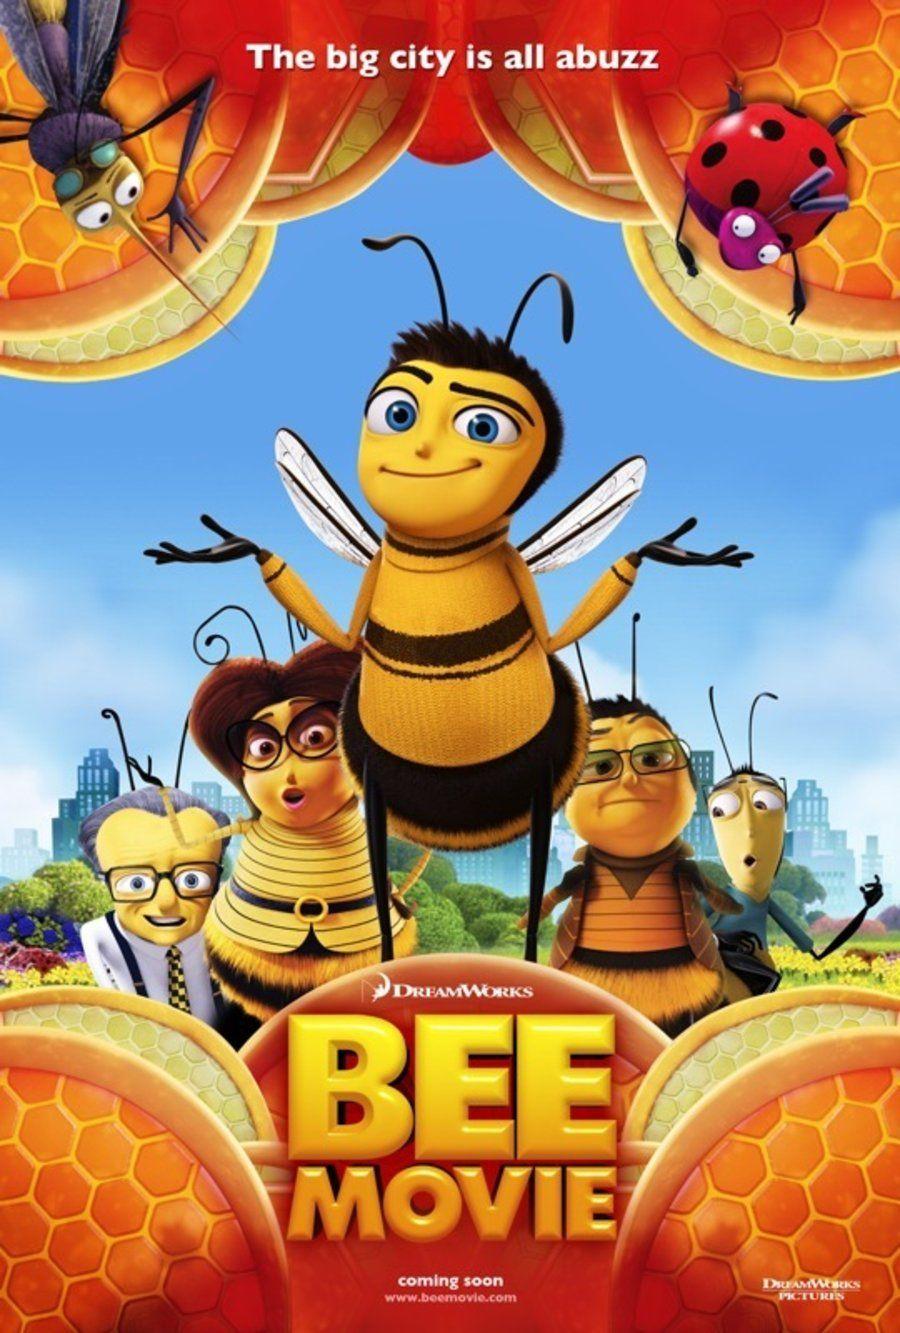 900x1333px Bee Movie 197.71 KB